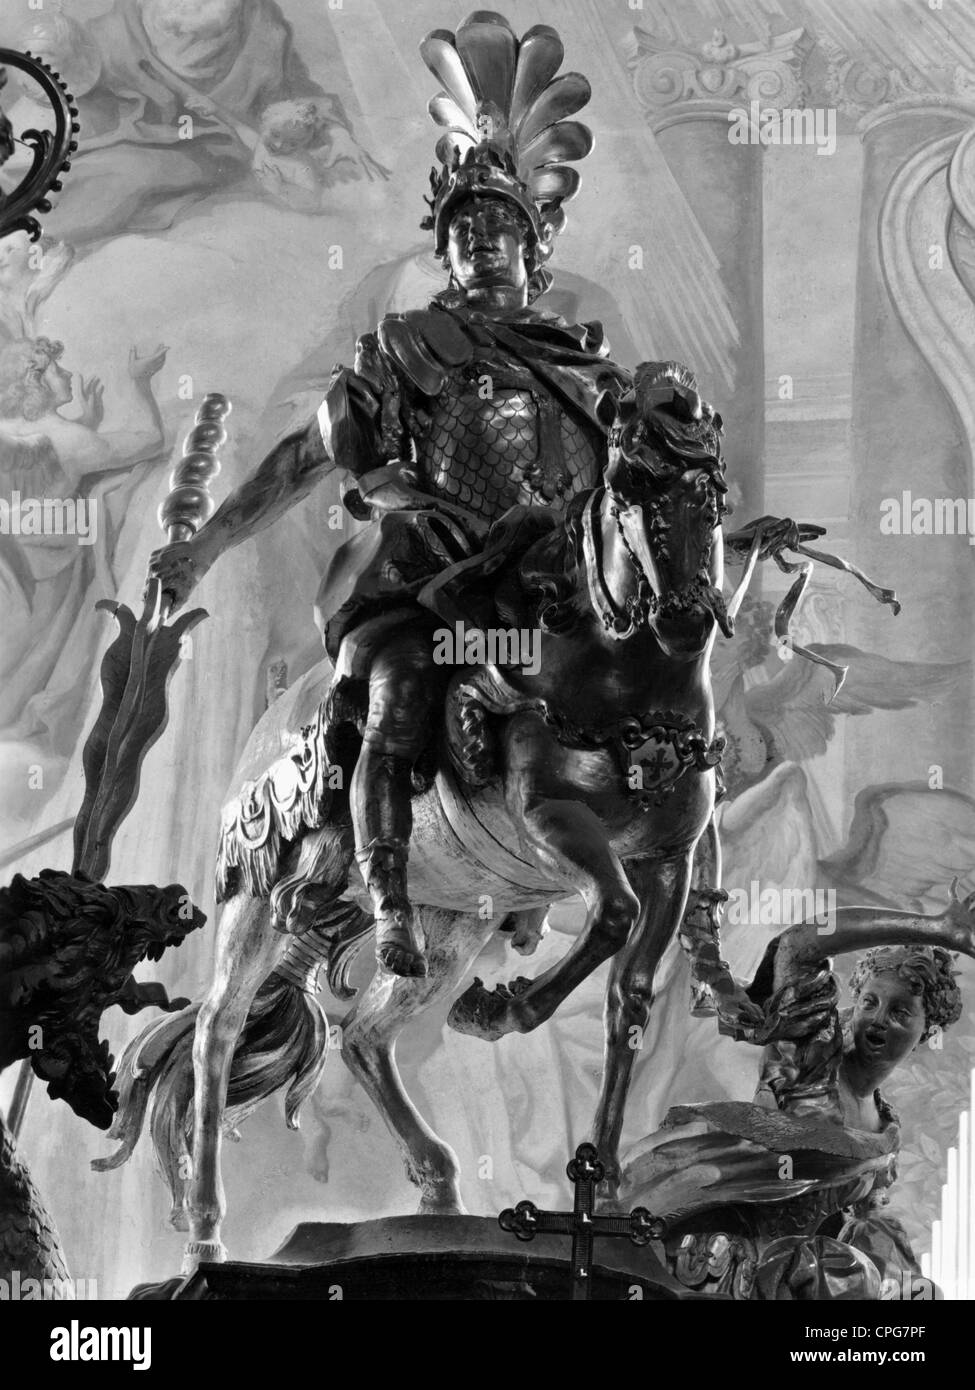 George, 3rd century AD - 23.4.303 AD, saint, martyr, full length, sculpture, Stock Photo